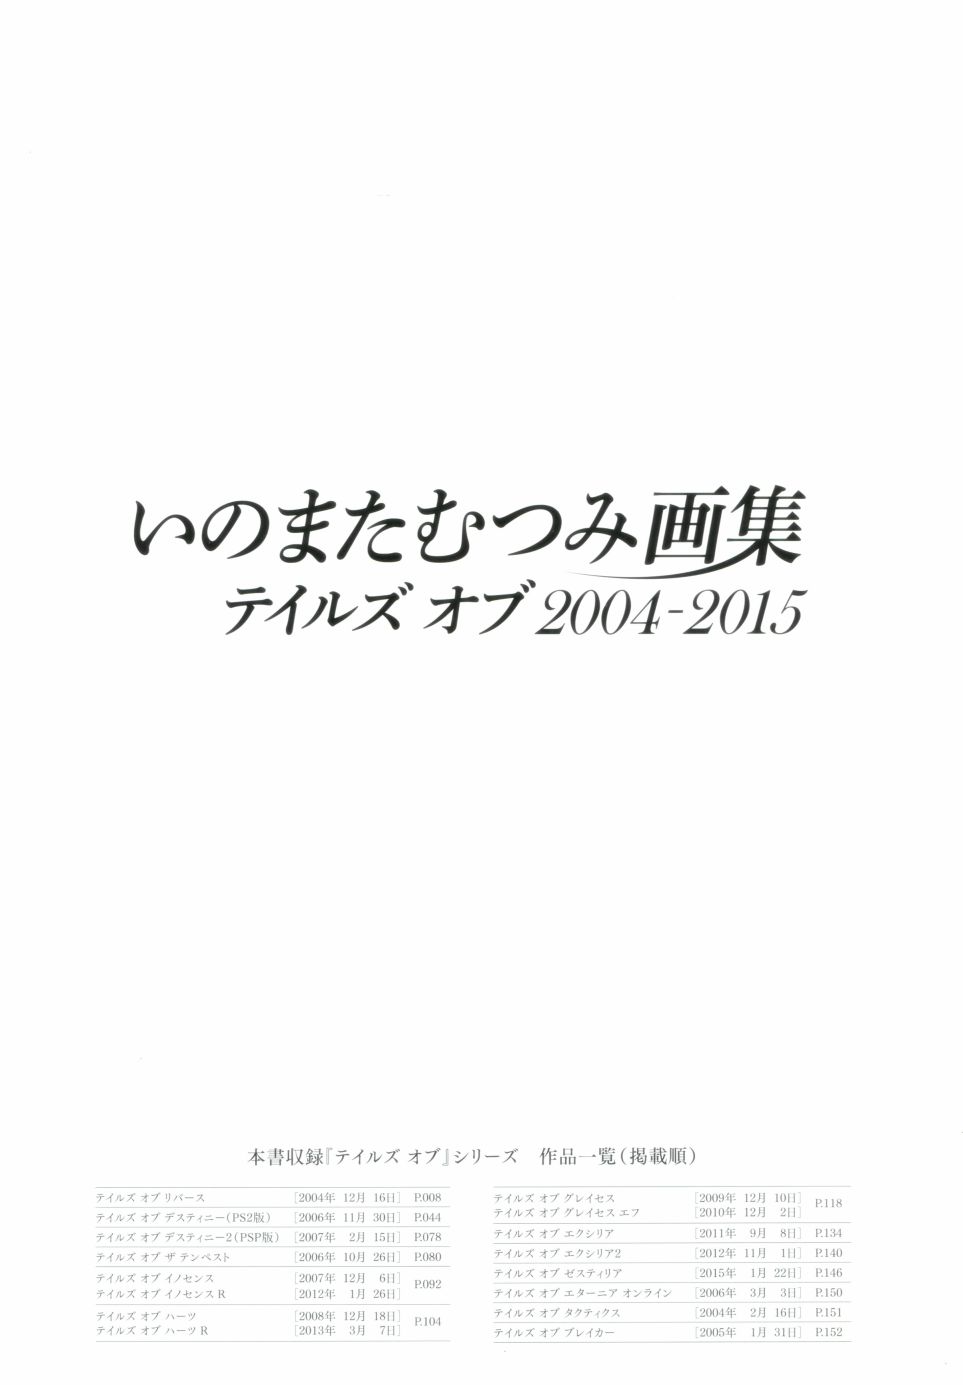 豬股睦美畫集 - Tales of 2004-2015(1/4) - 1